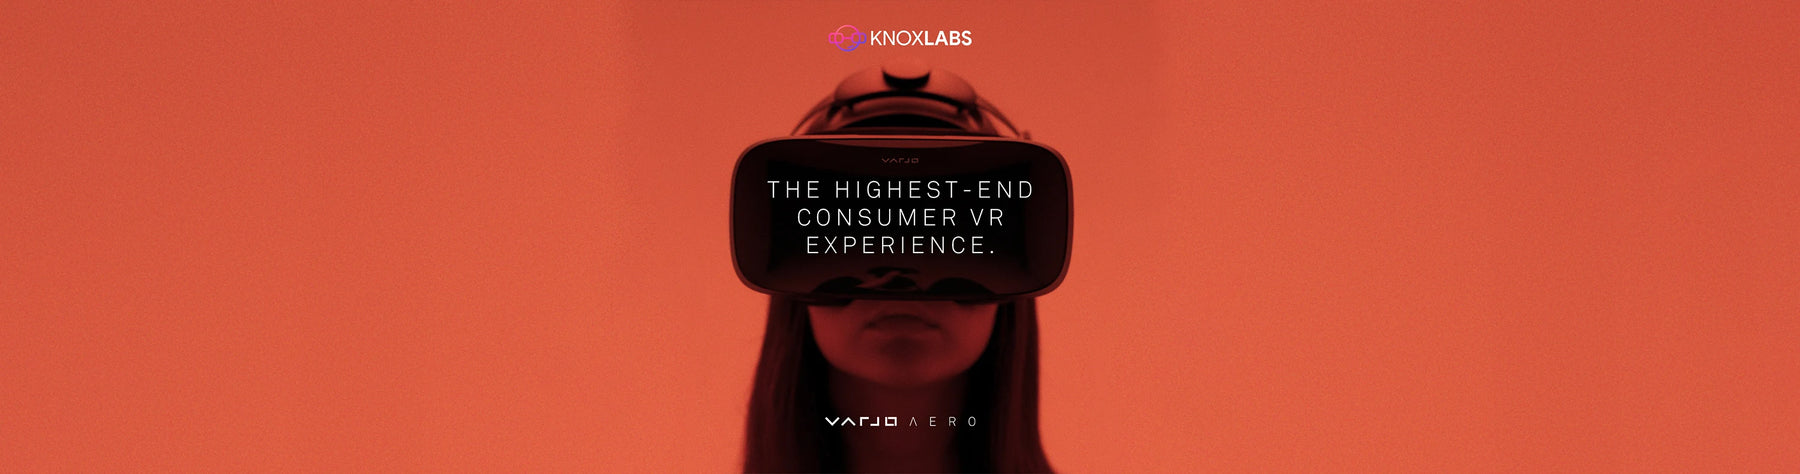 Varjo Aero's Unprecedented Value Proposition: Highest-End Immersive Experiences Now More Accessible